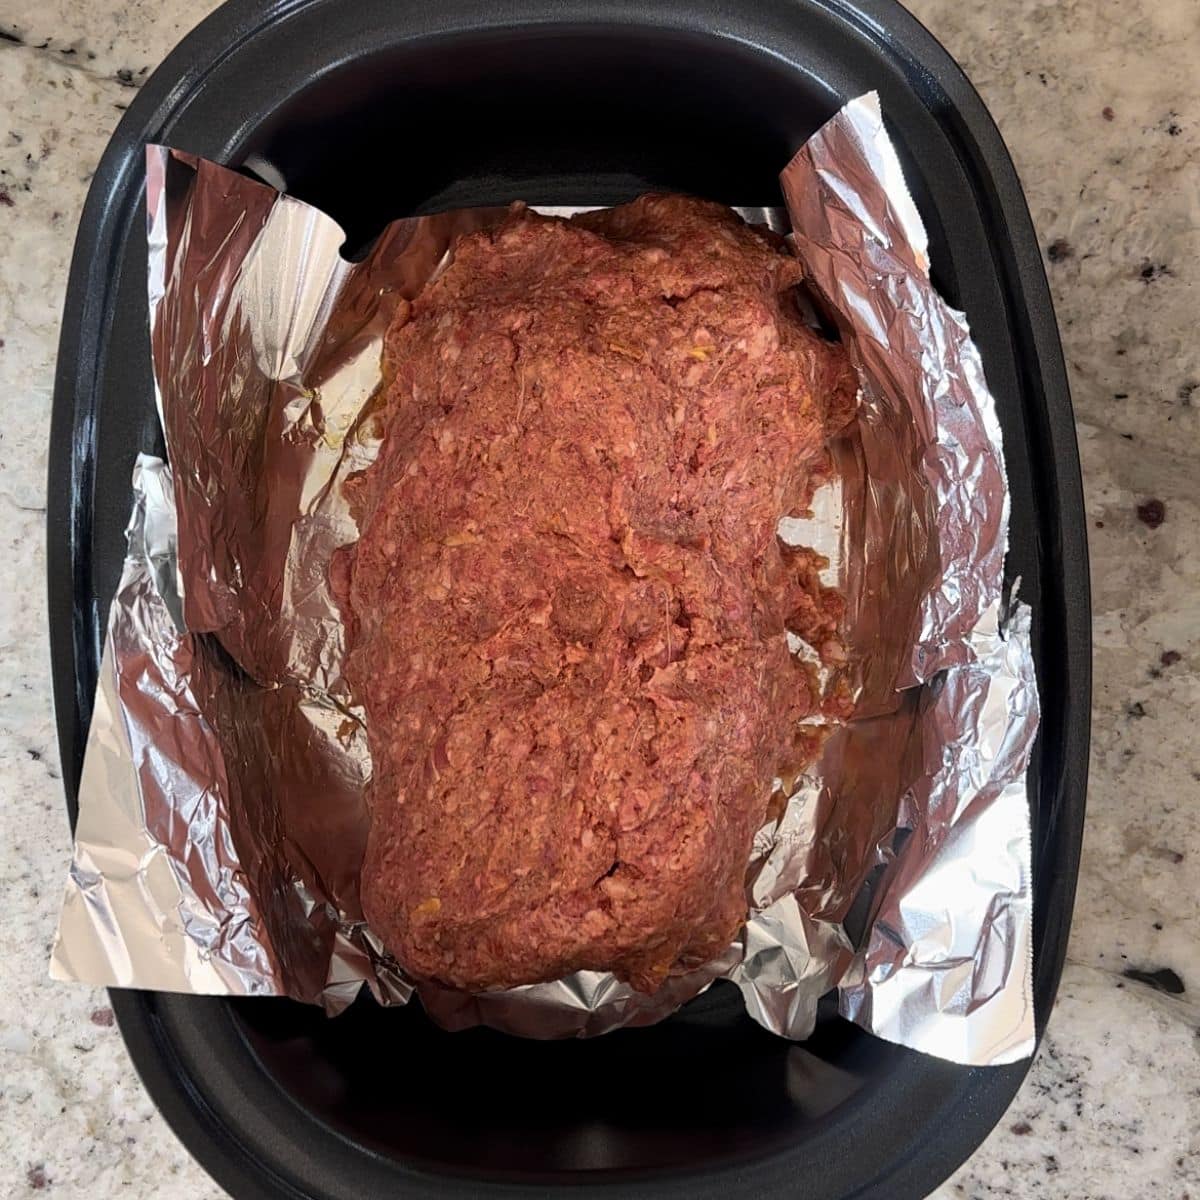 A shaped meat loaf in a black oval crock pot.